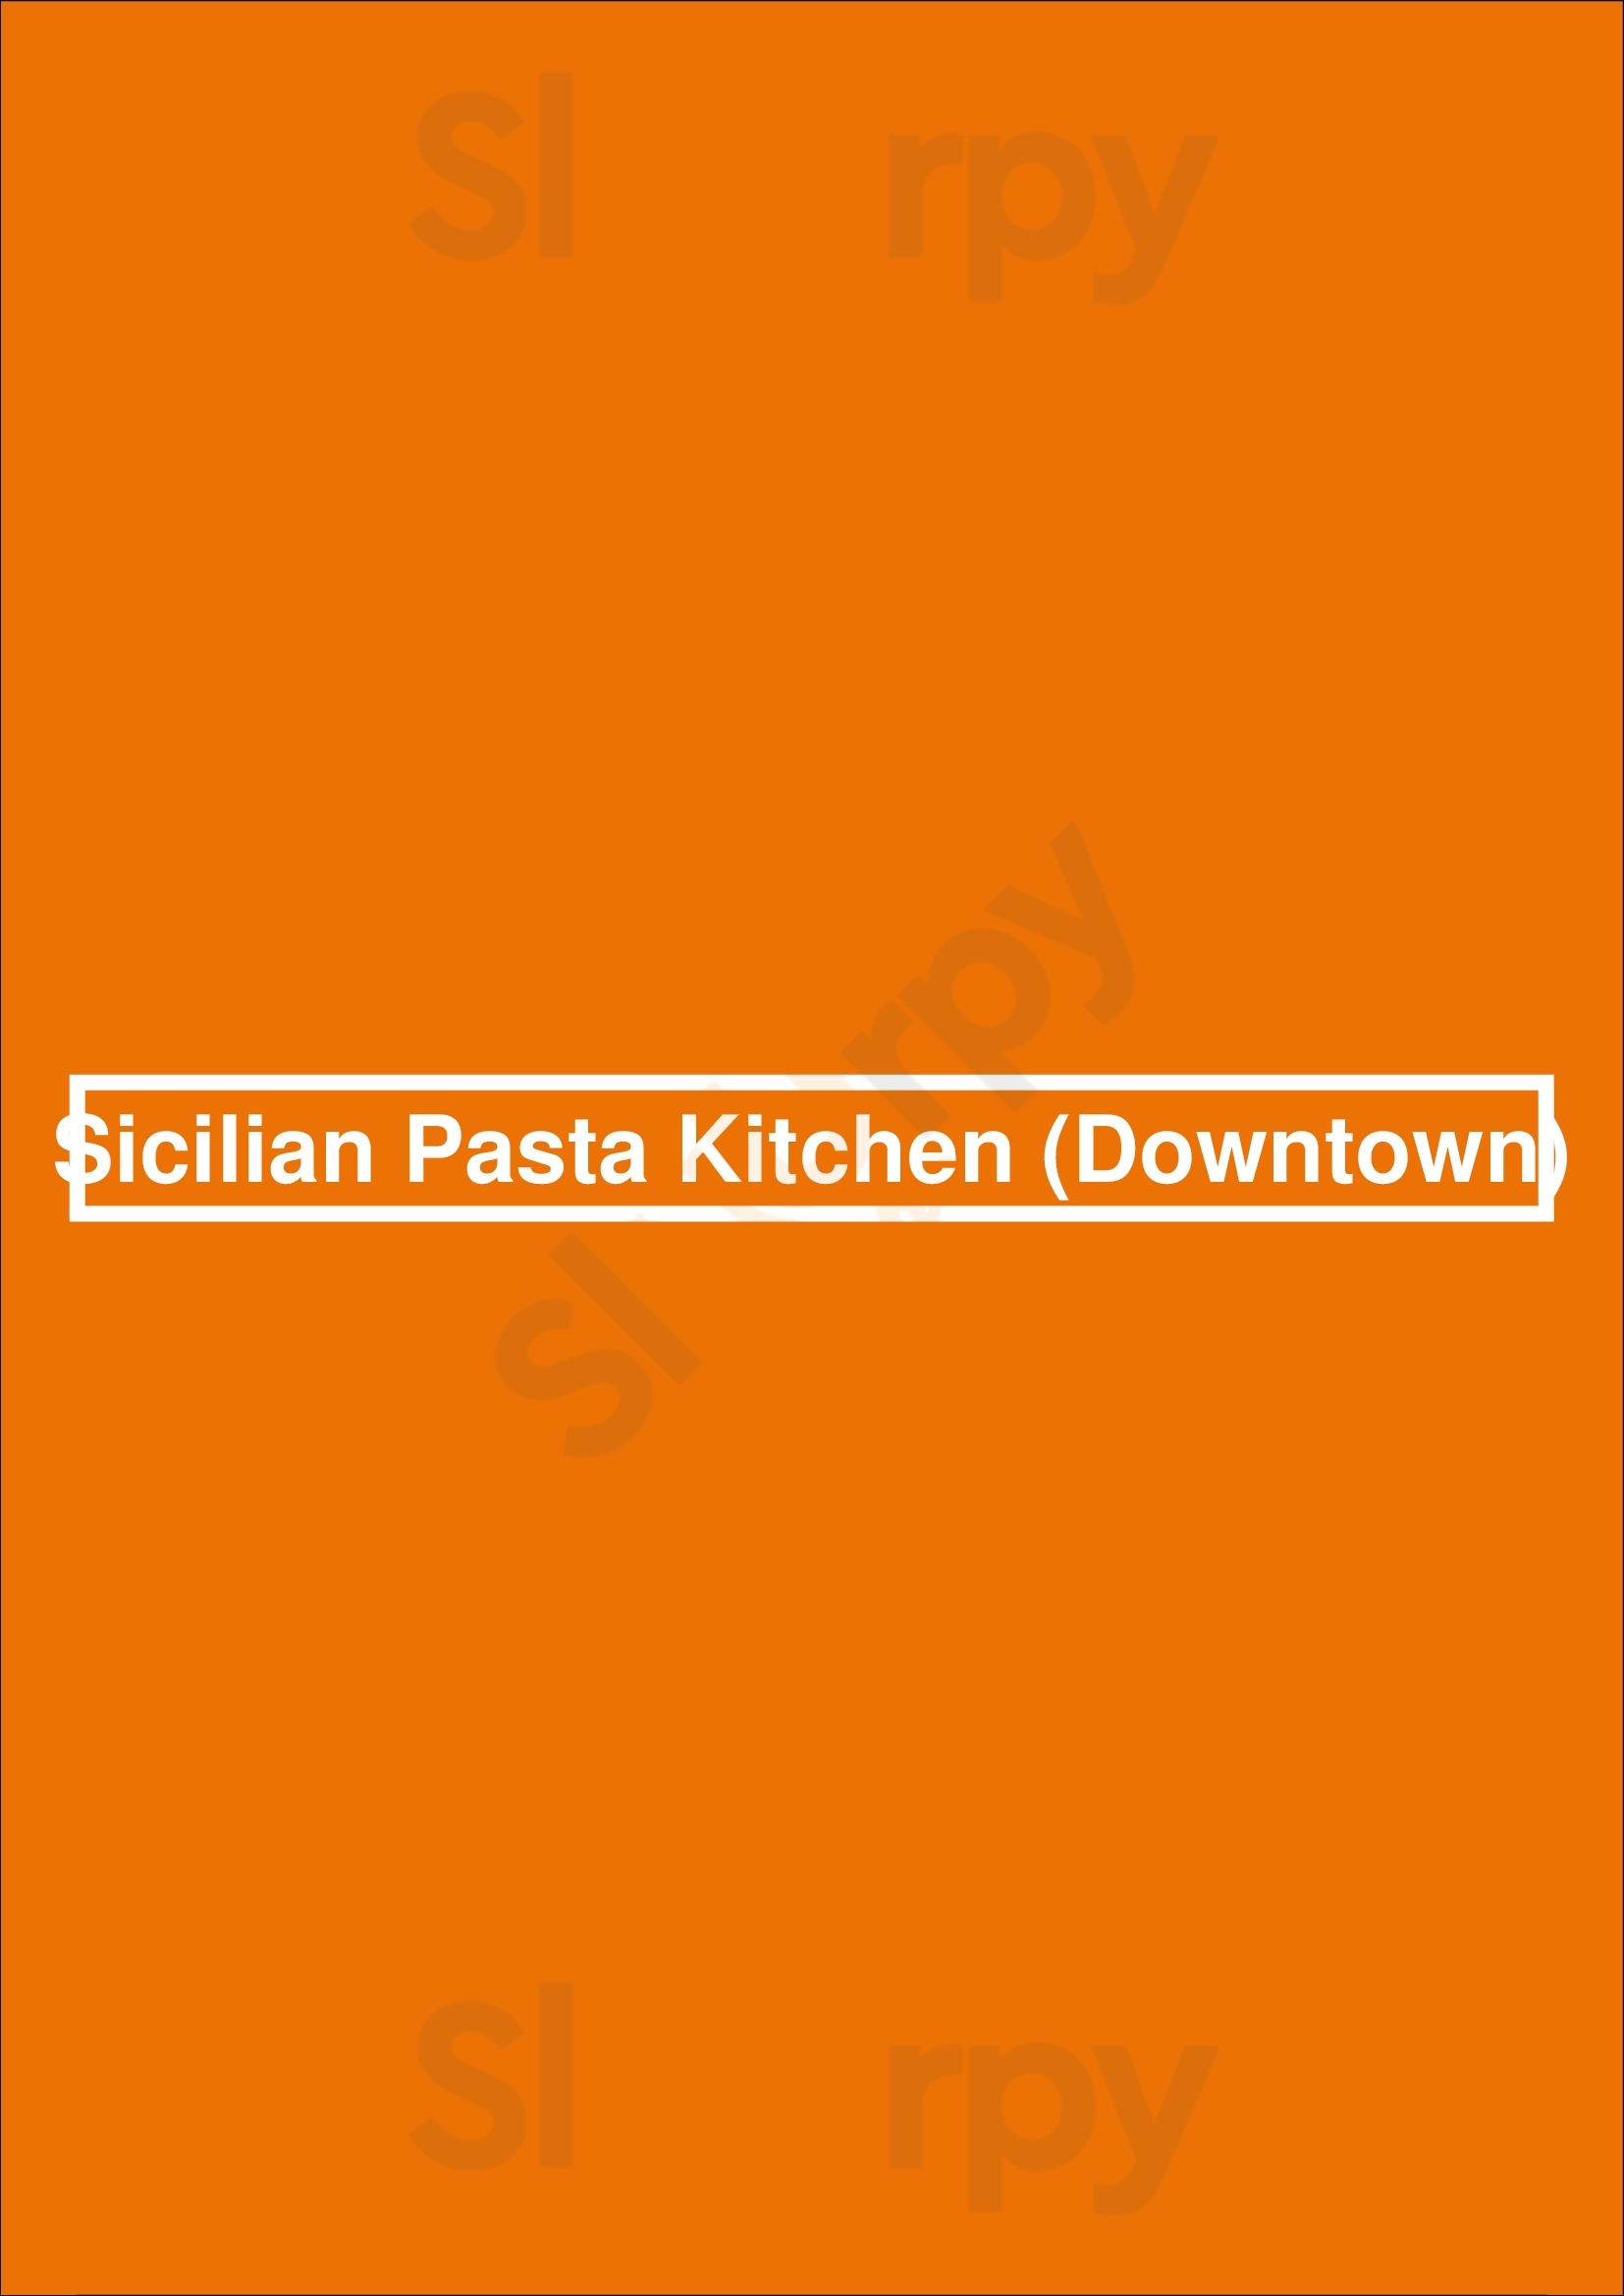 Sicilian Pasta Kitchen (downtown) Edmonton Menu - 1